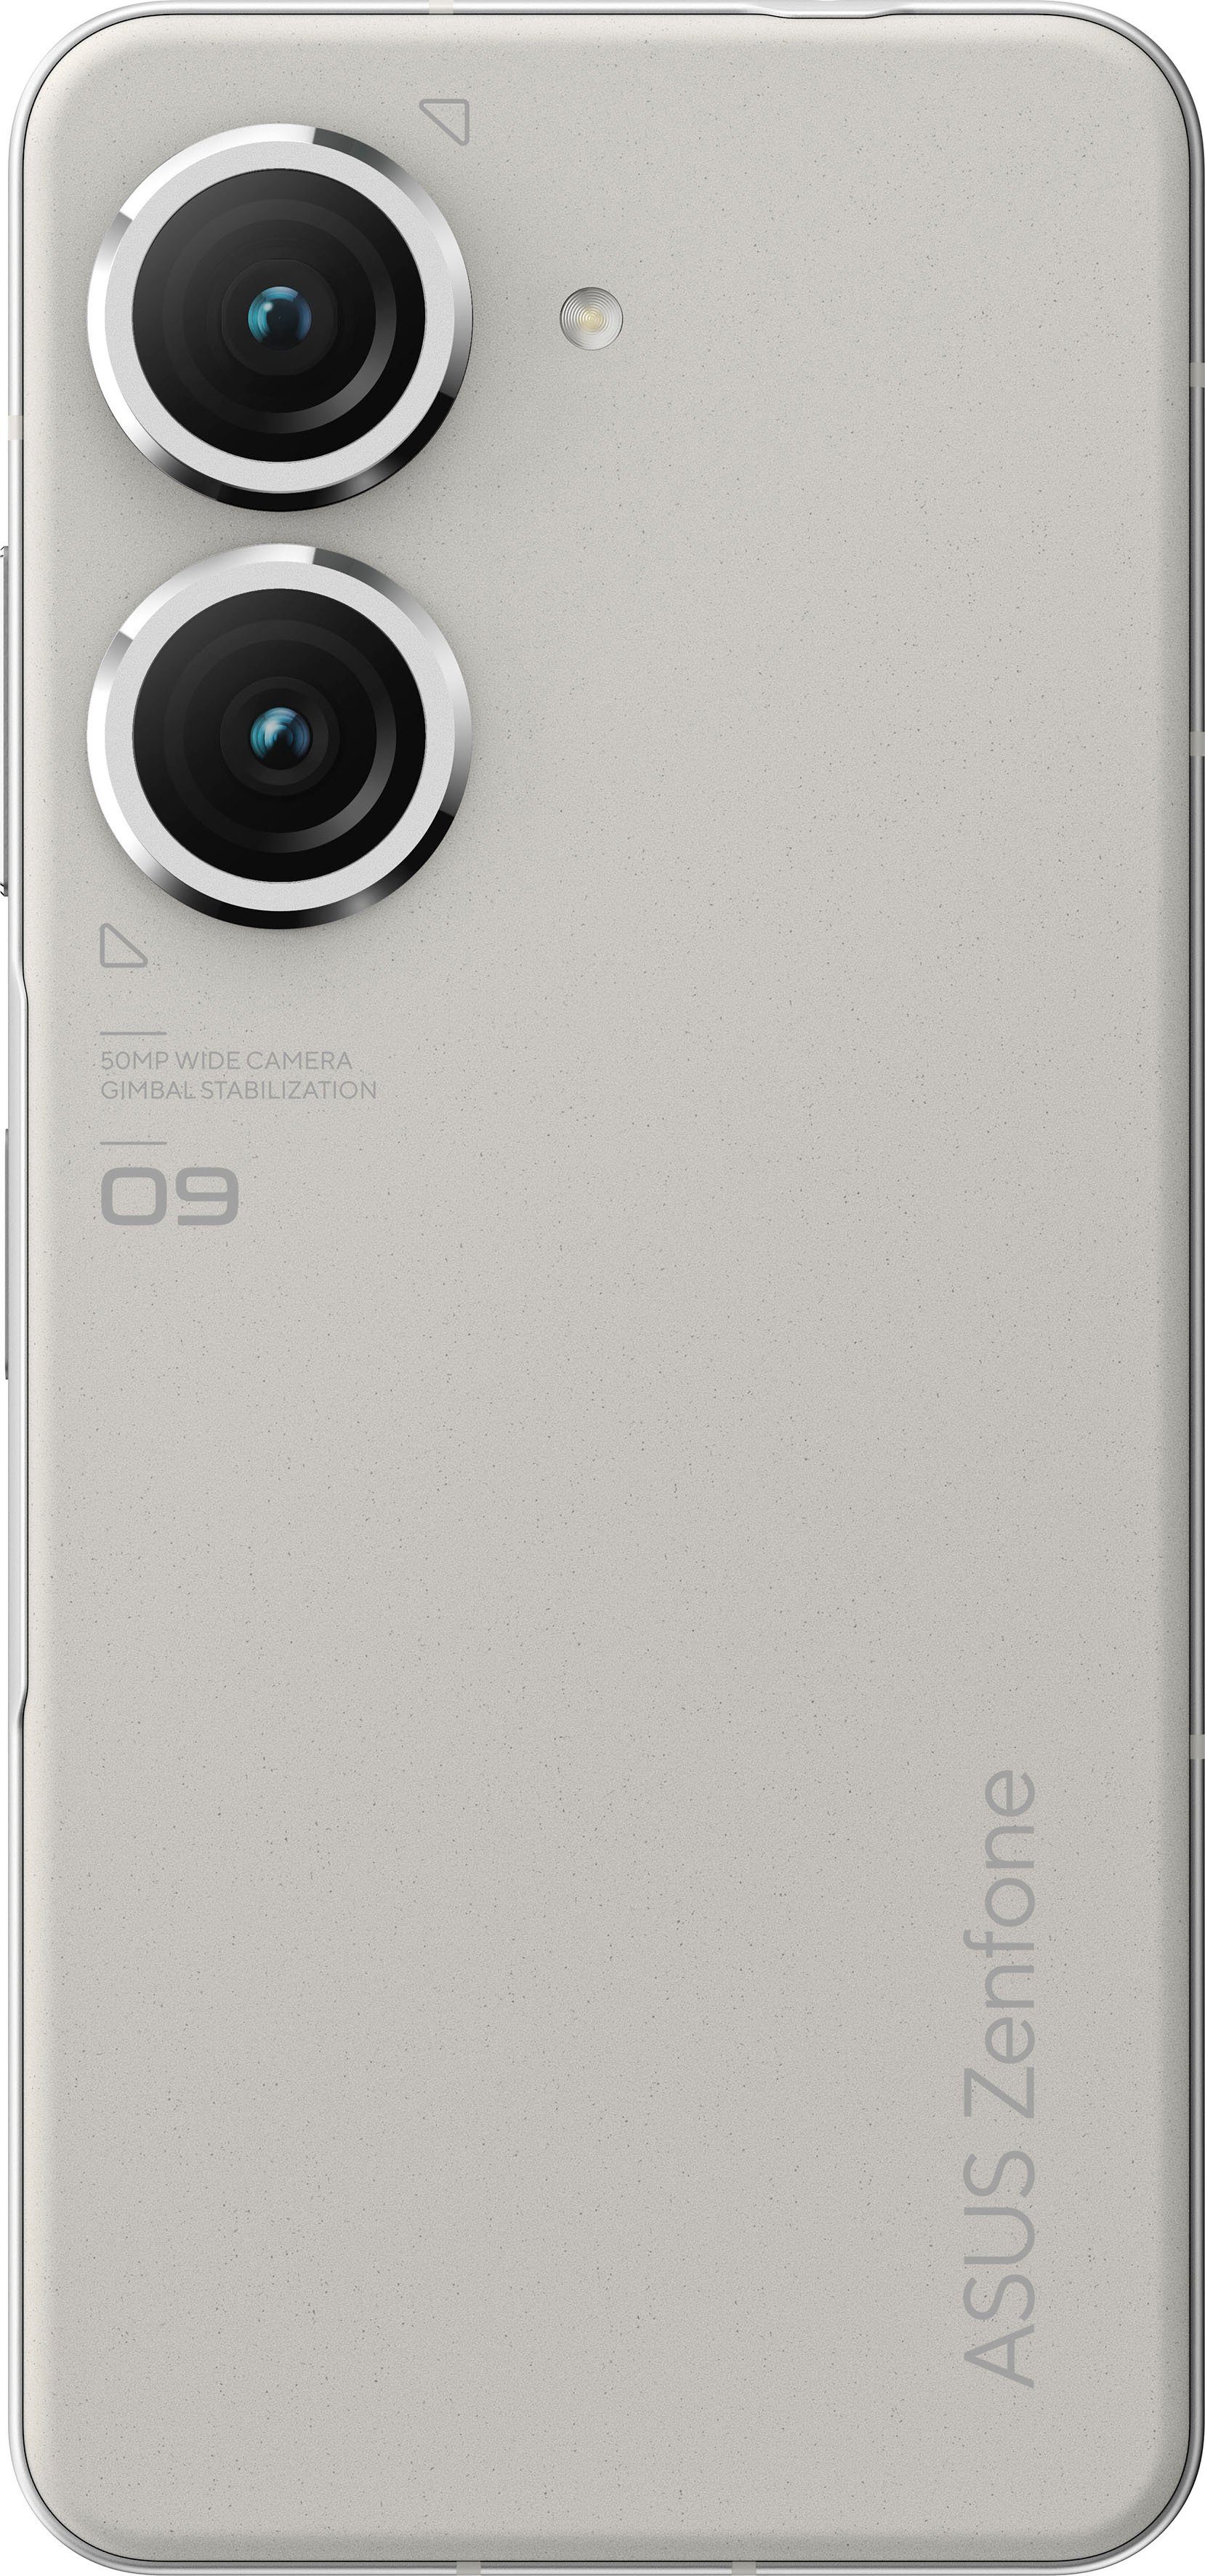 Asus White (15,04 50 Smartphone Speicherplatz, Zenfone Kamera) 9 GB Zoll, 256 MP Moonlight cm/5,92